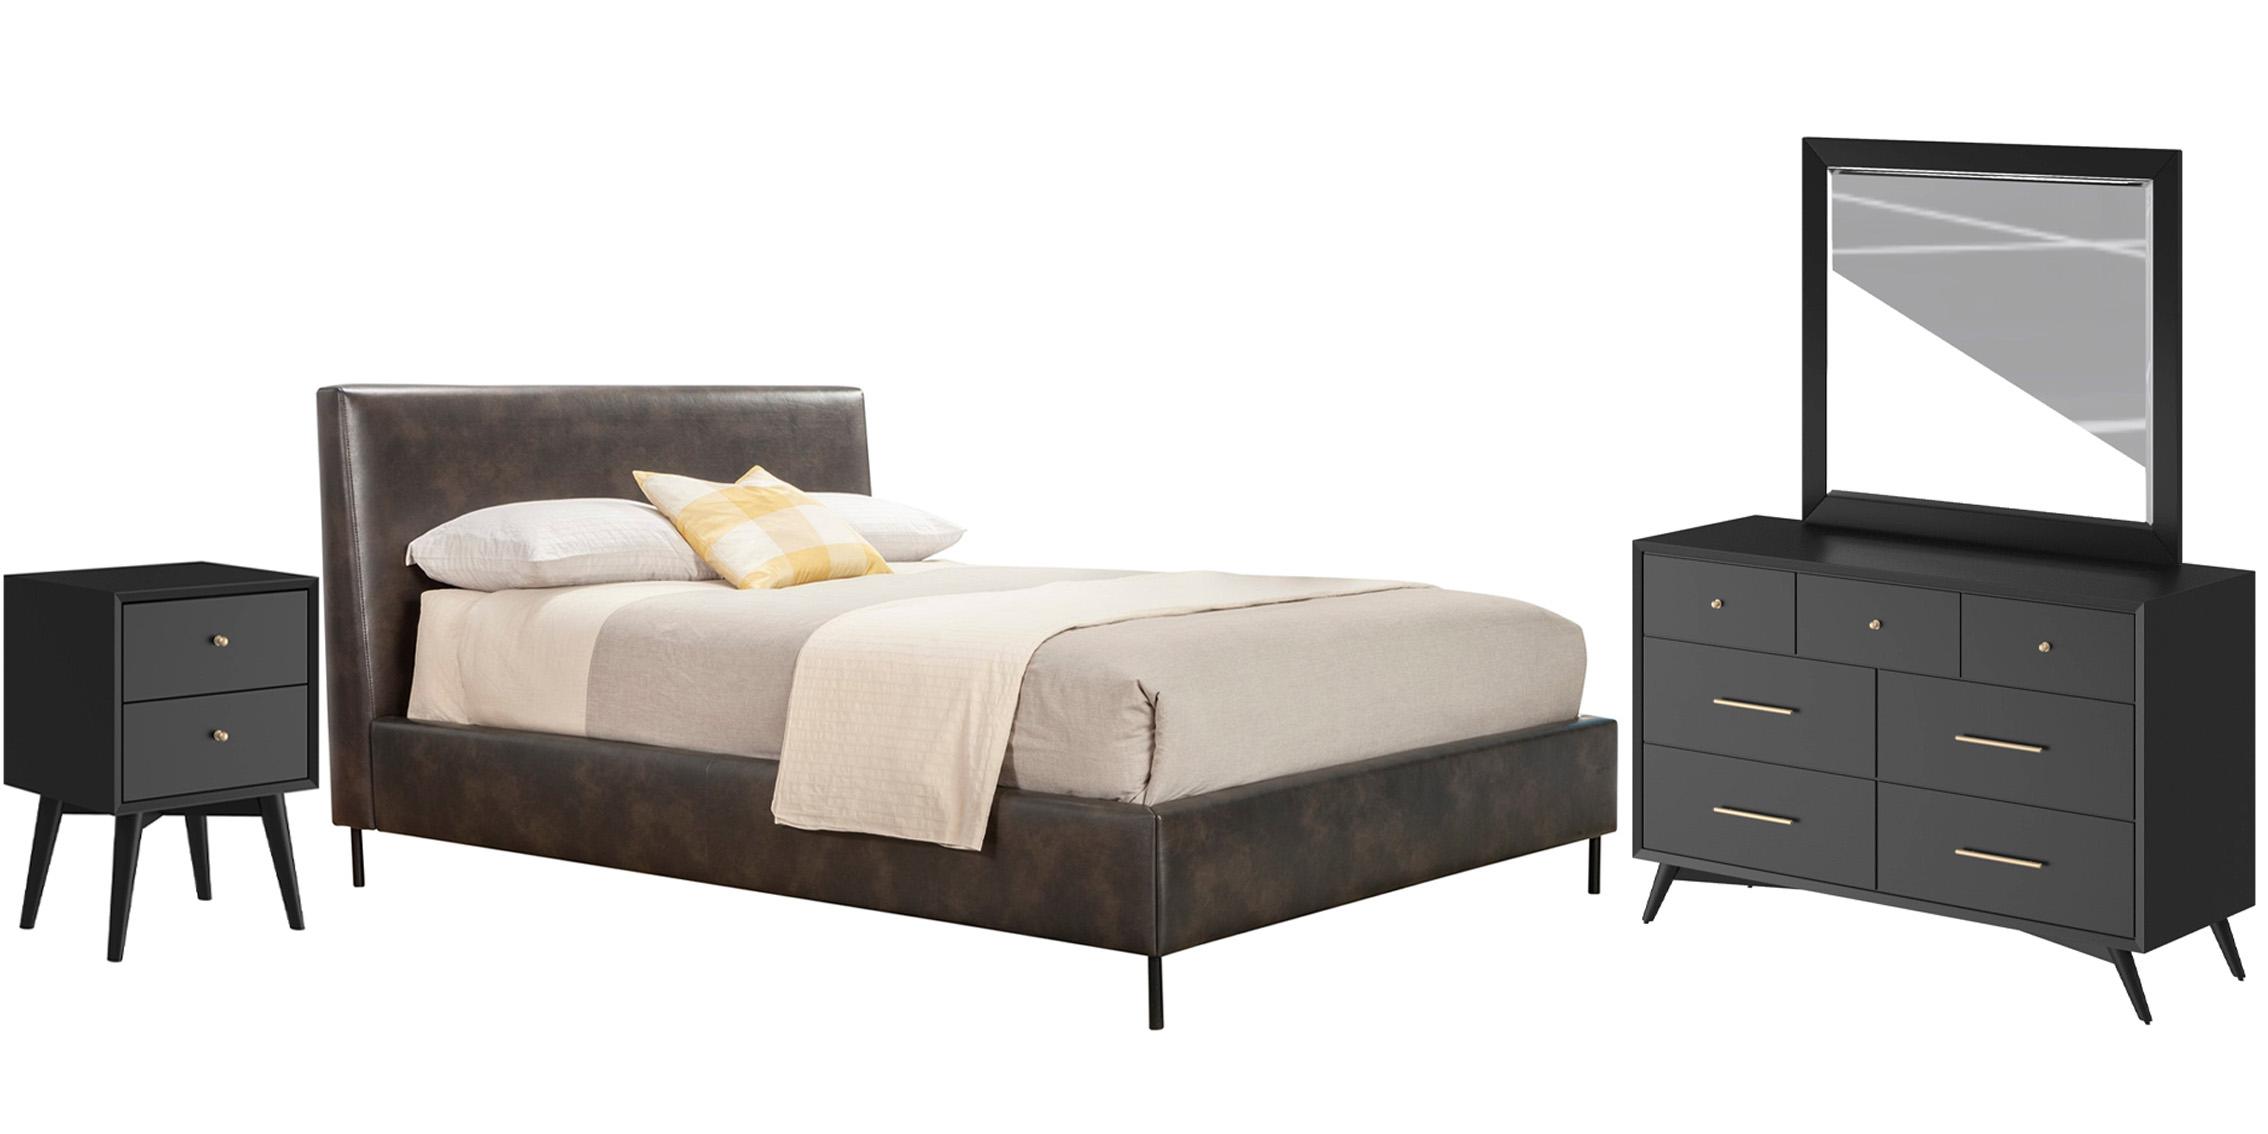 Modern Platform Bedroom Set SOPHIA / FLYNN 6902Q-GRY-Set-4-BLK in Gray, Black Faux Leather